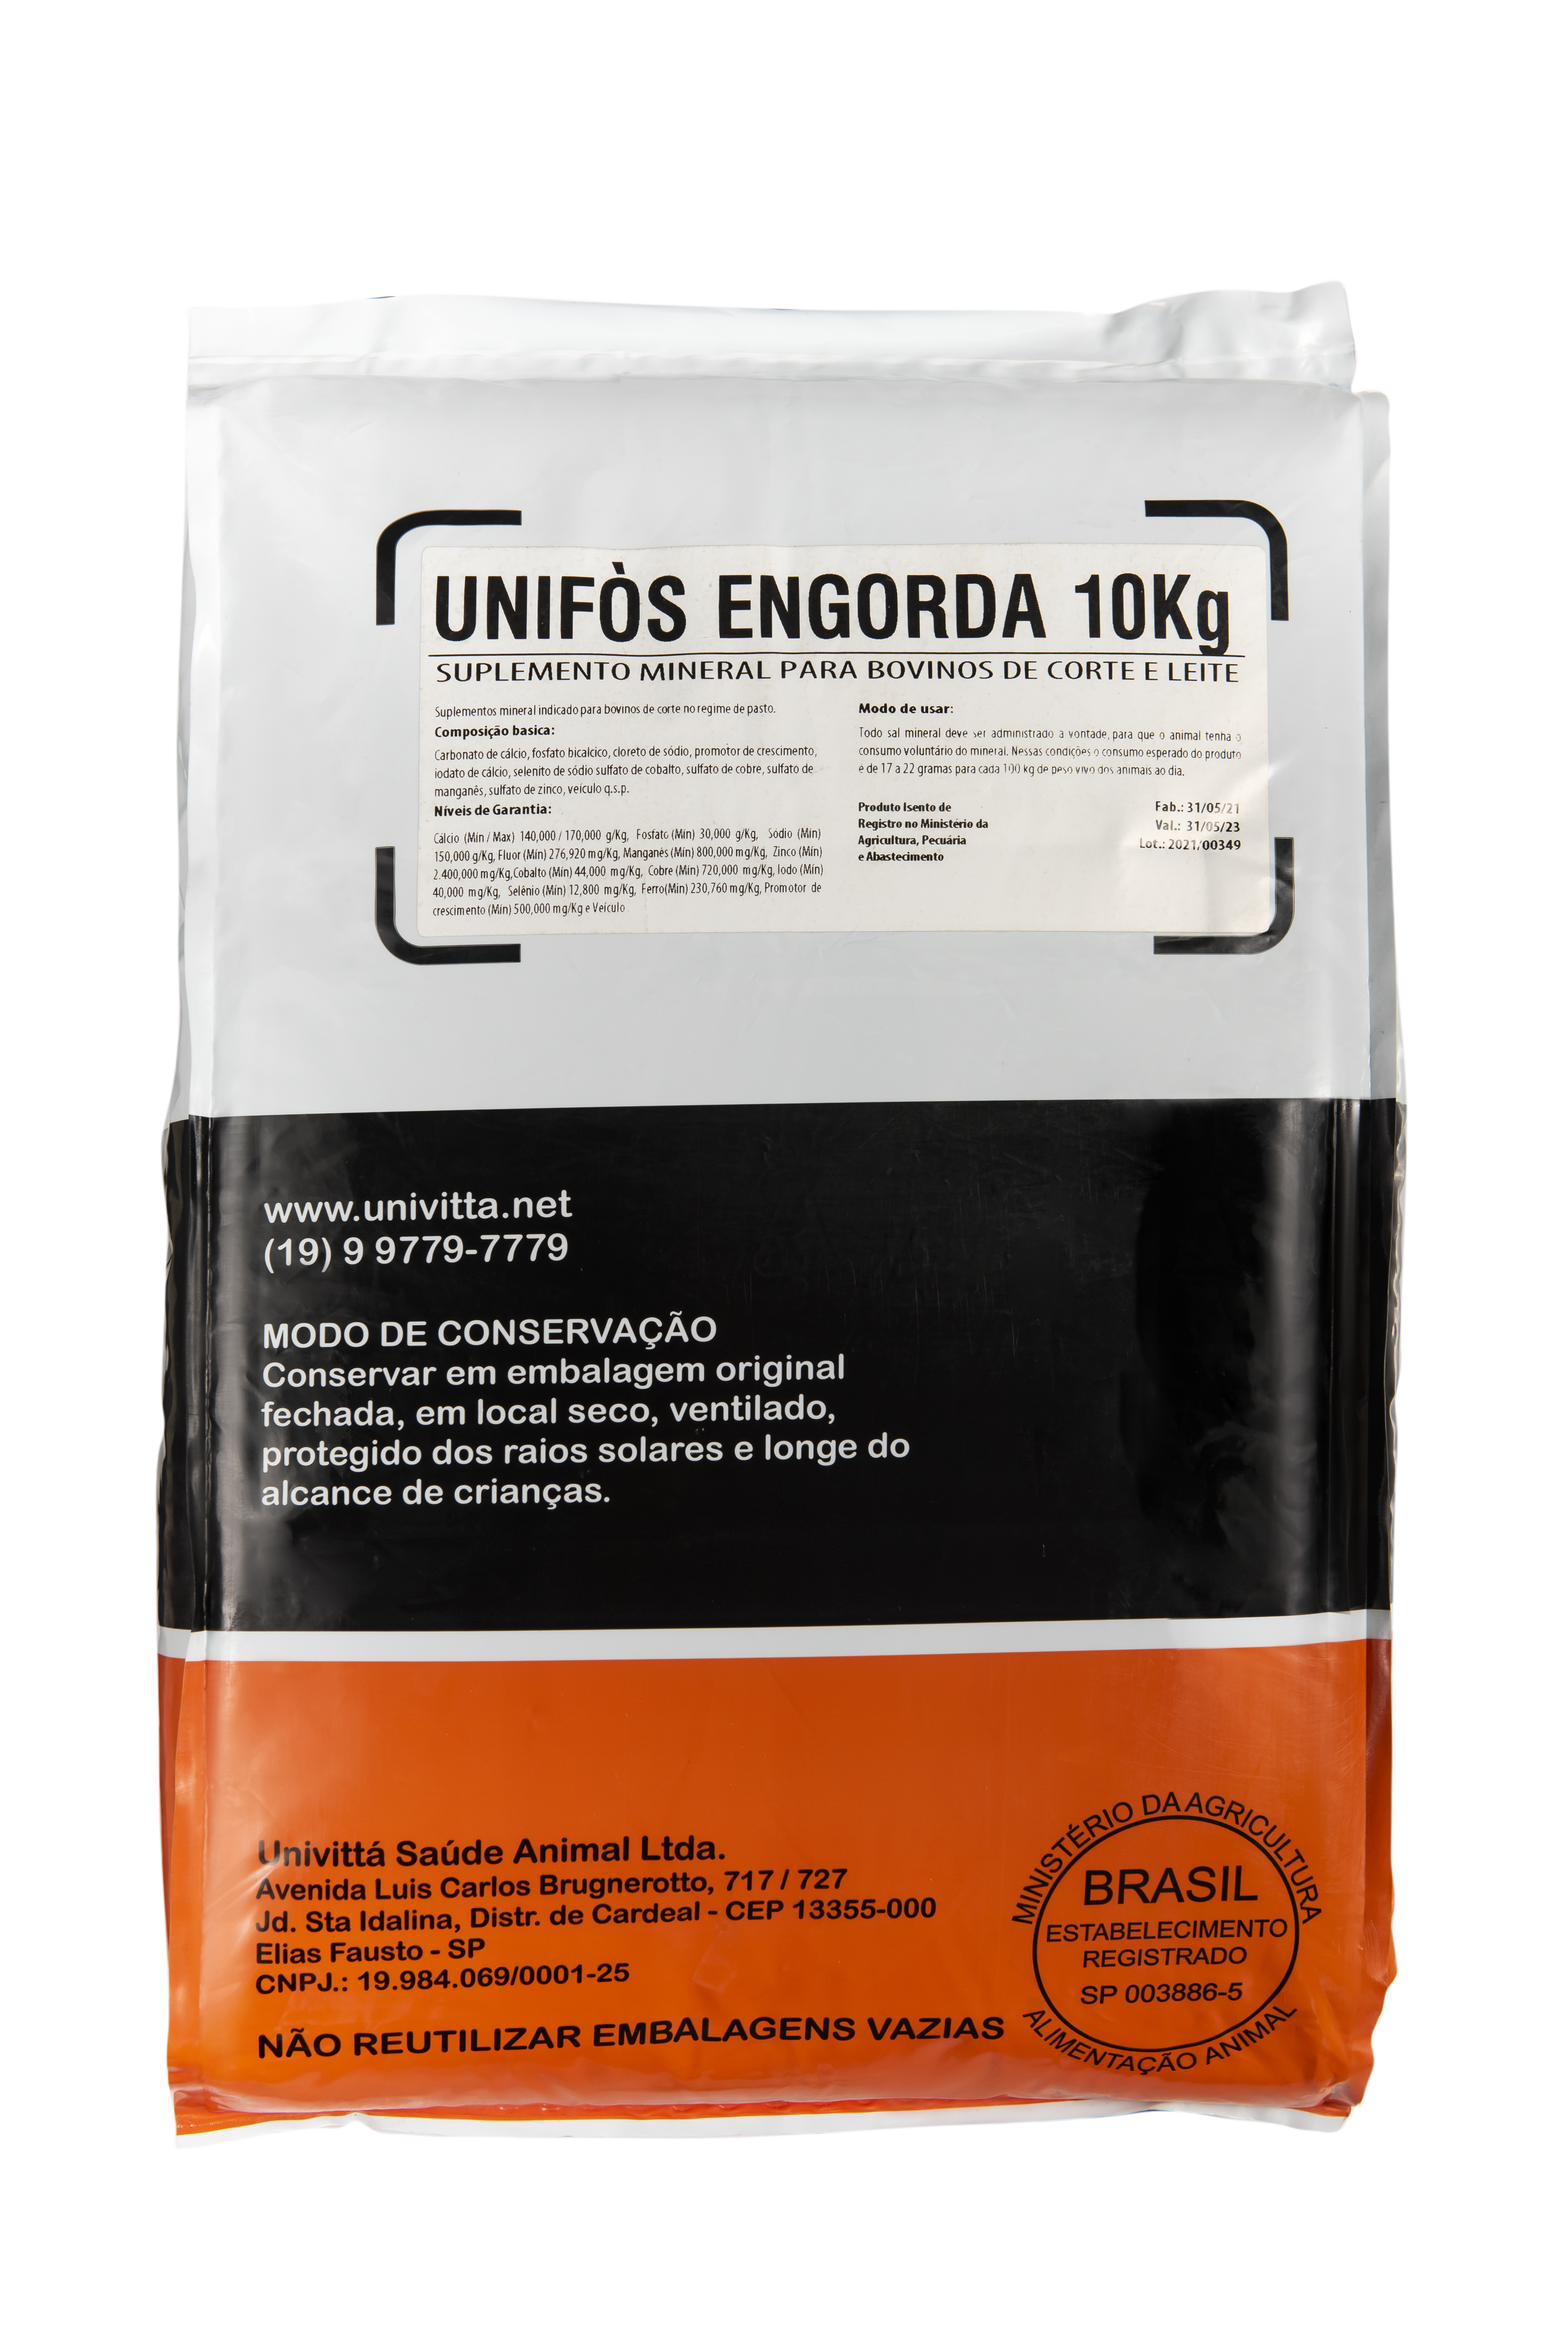 UNIFós Engorda - Suplemento Mineral para Bovinos